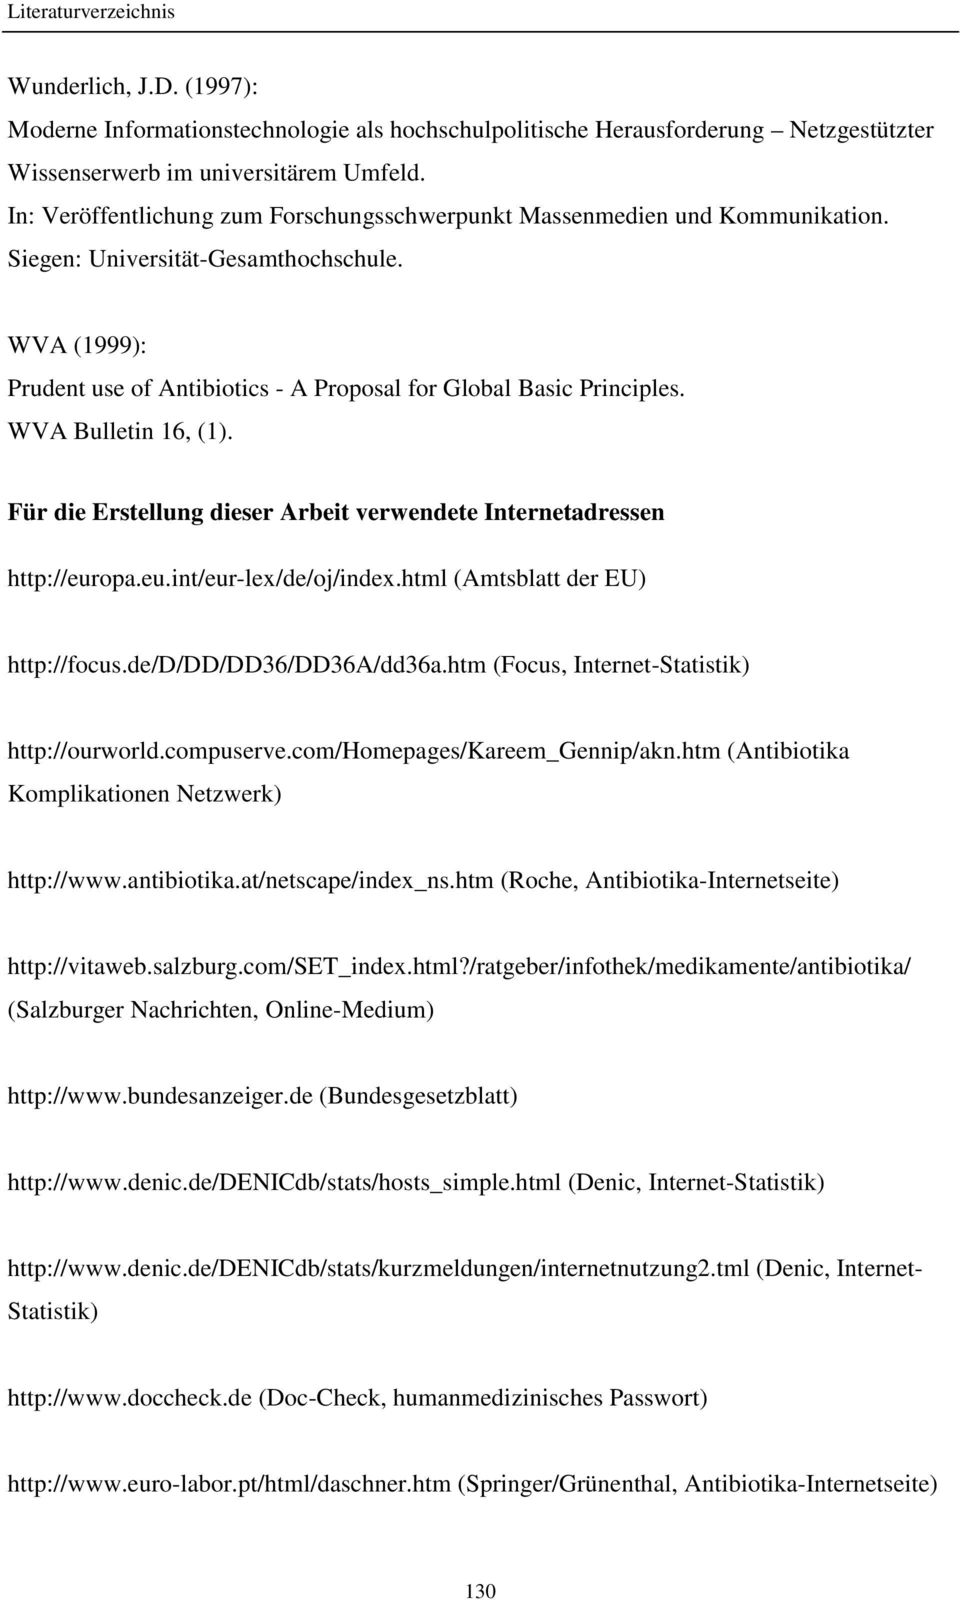 WVA Bulletin 16, (1). Für die Erstellung dieser Arbeit verwendete Internetadressen http://europa.eu.int/eur-lex/de/oj/index.html (Amtsblatt der EU) http://focus.de/d/dd/dd36/dd36a/dd36a.